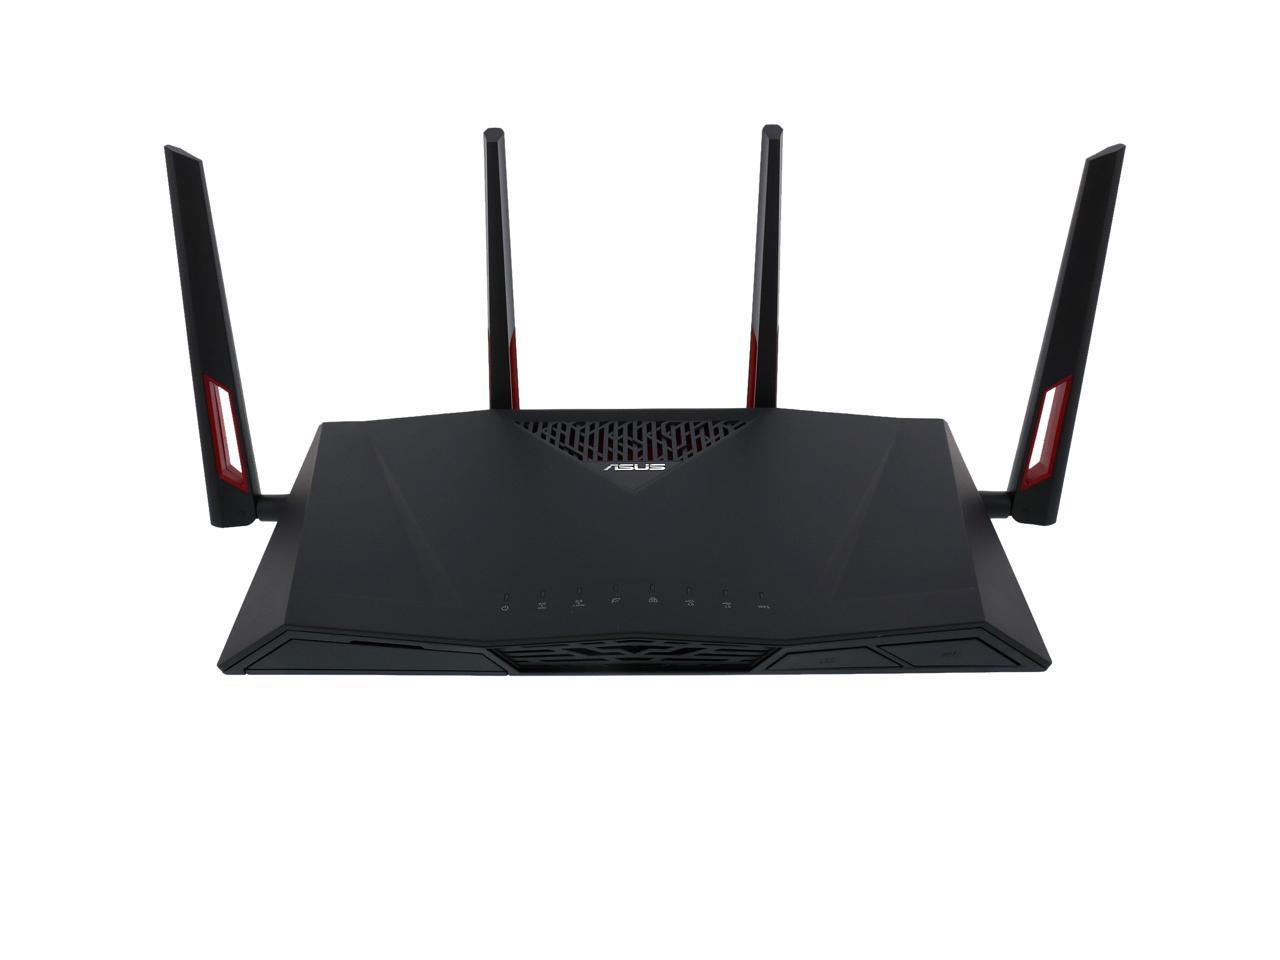 ASUS AC3100 Wi-Fi Dual-band Gigabit Wireless Router with 4×4 MU-MIMO, 4 x LAN Ports